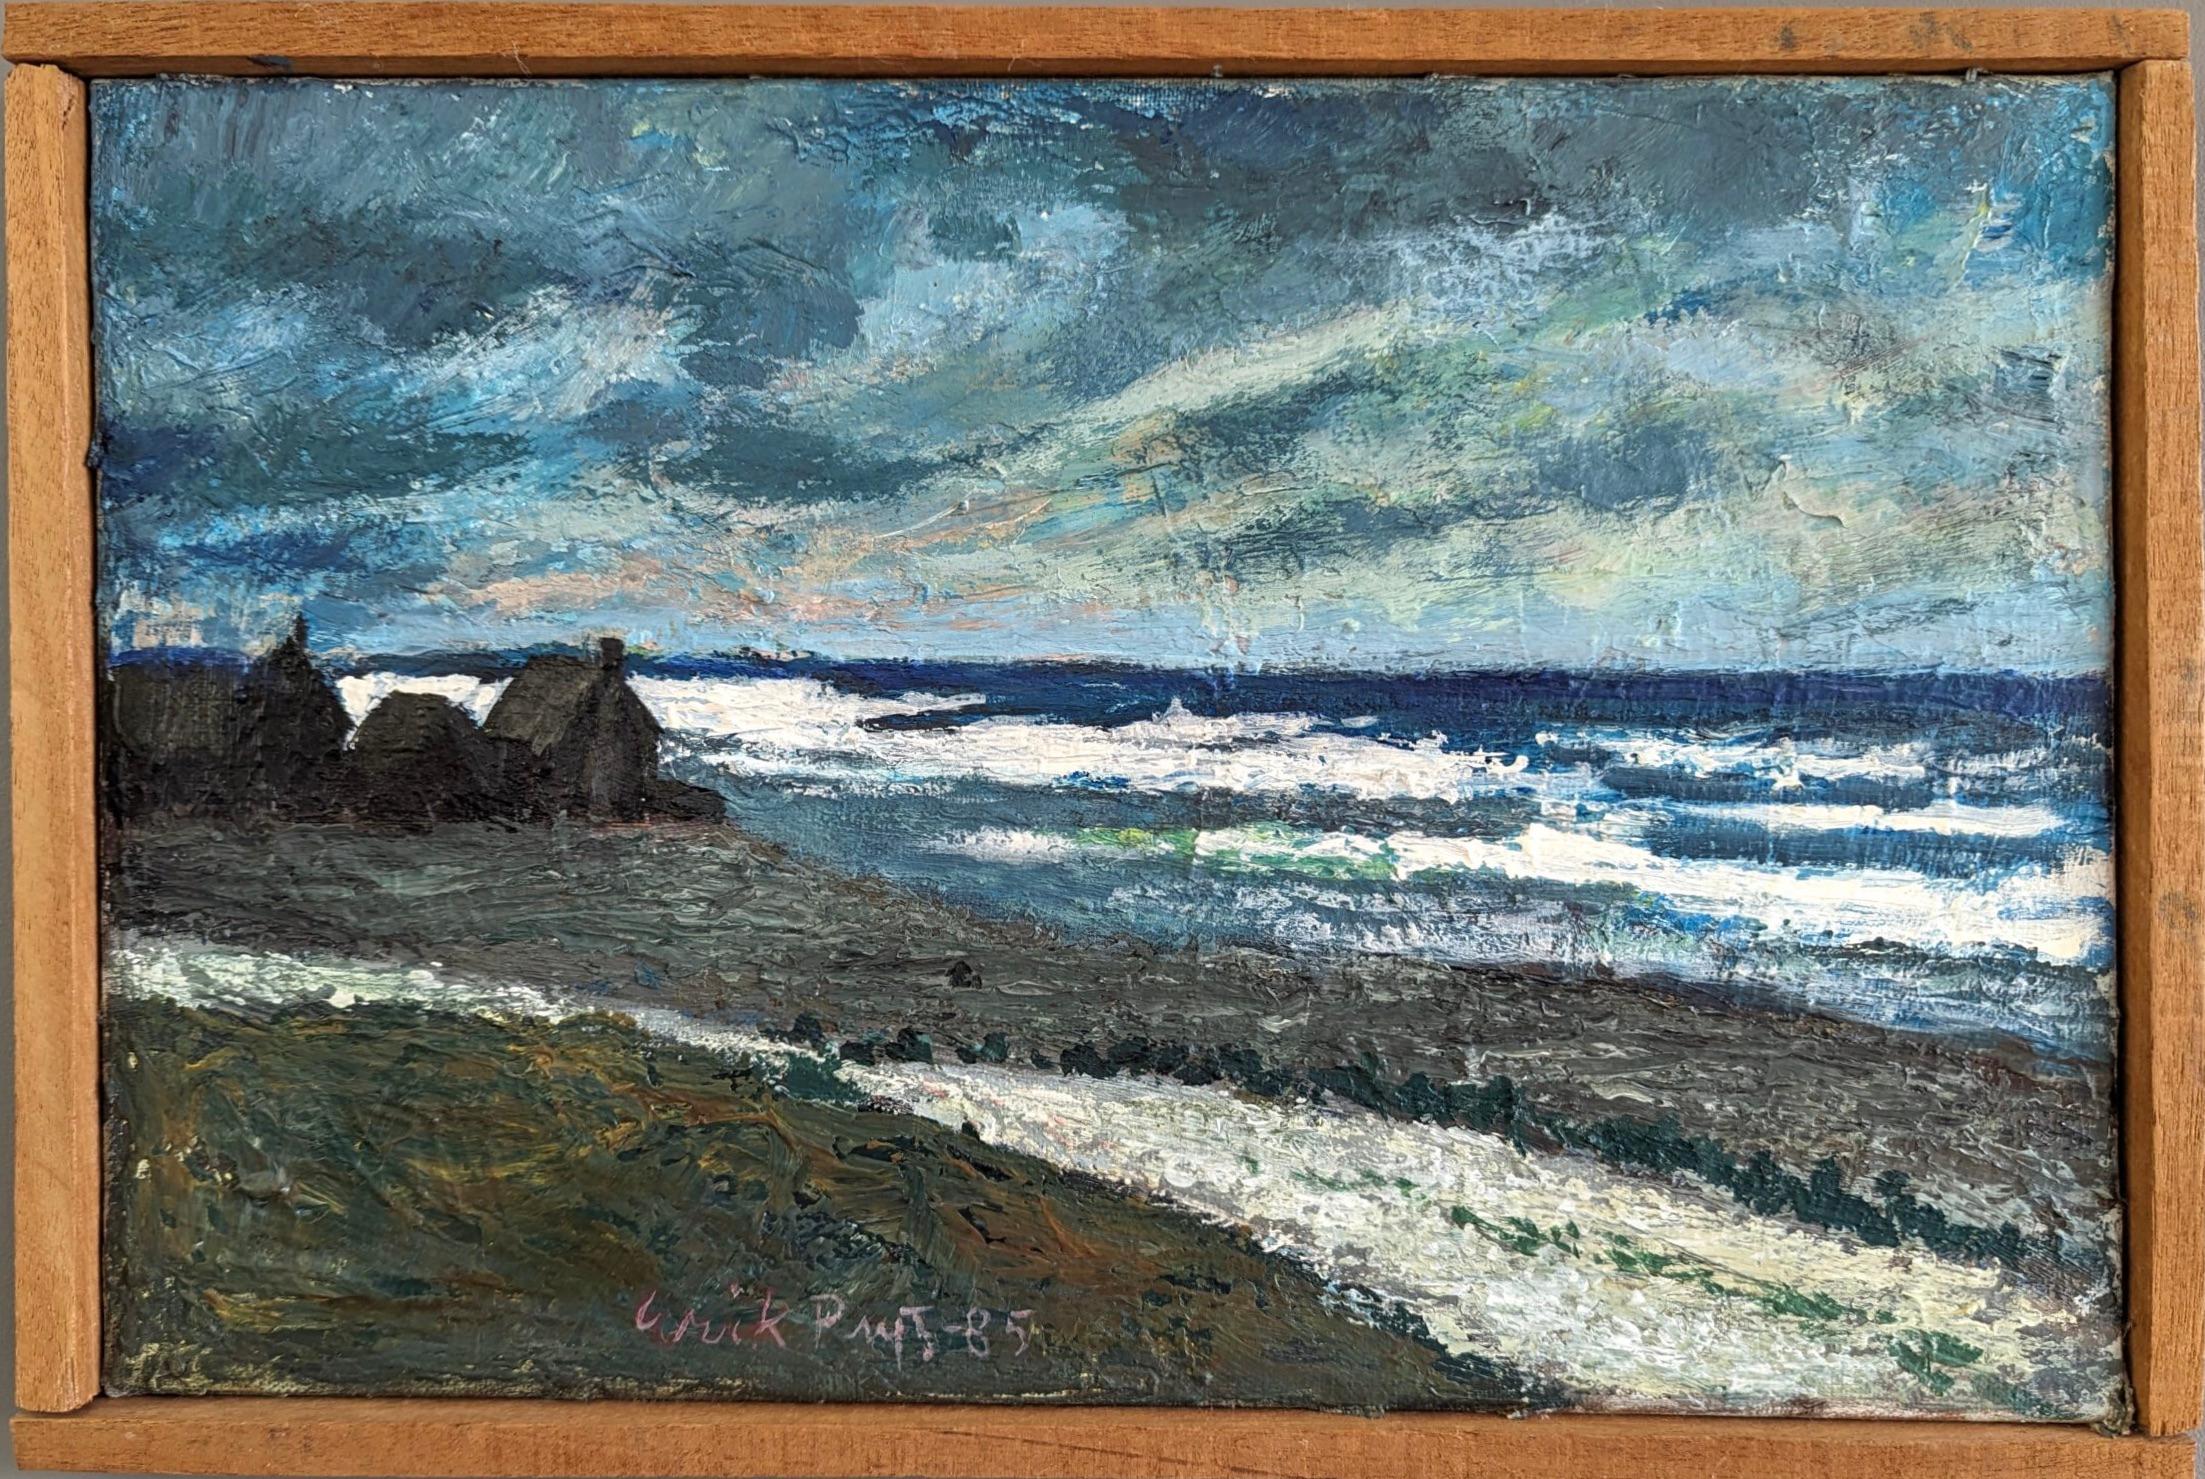 Unknown Landscape Painting - 1985 Vintage Expressive Coastal Landscape Oil Painting - Dramatic Coast